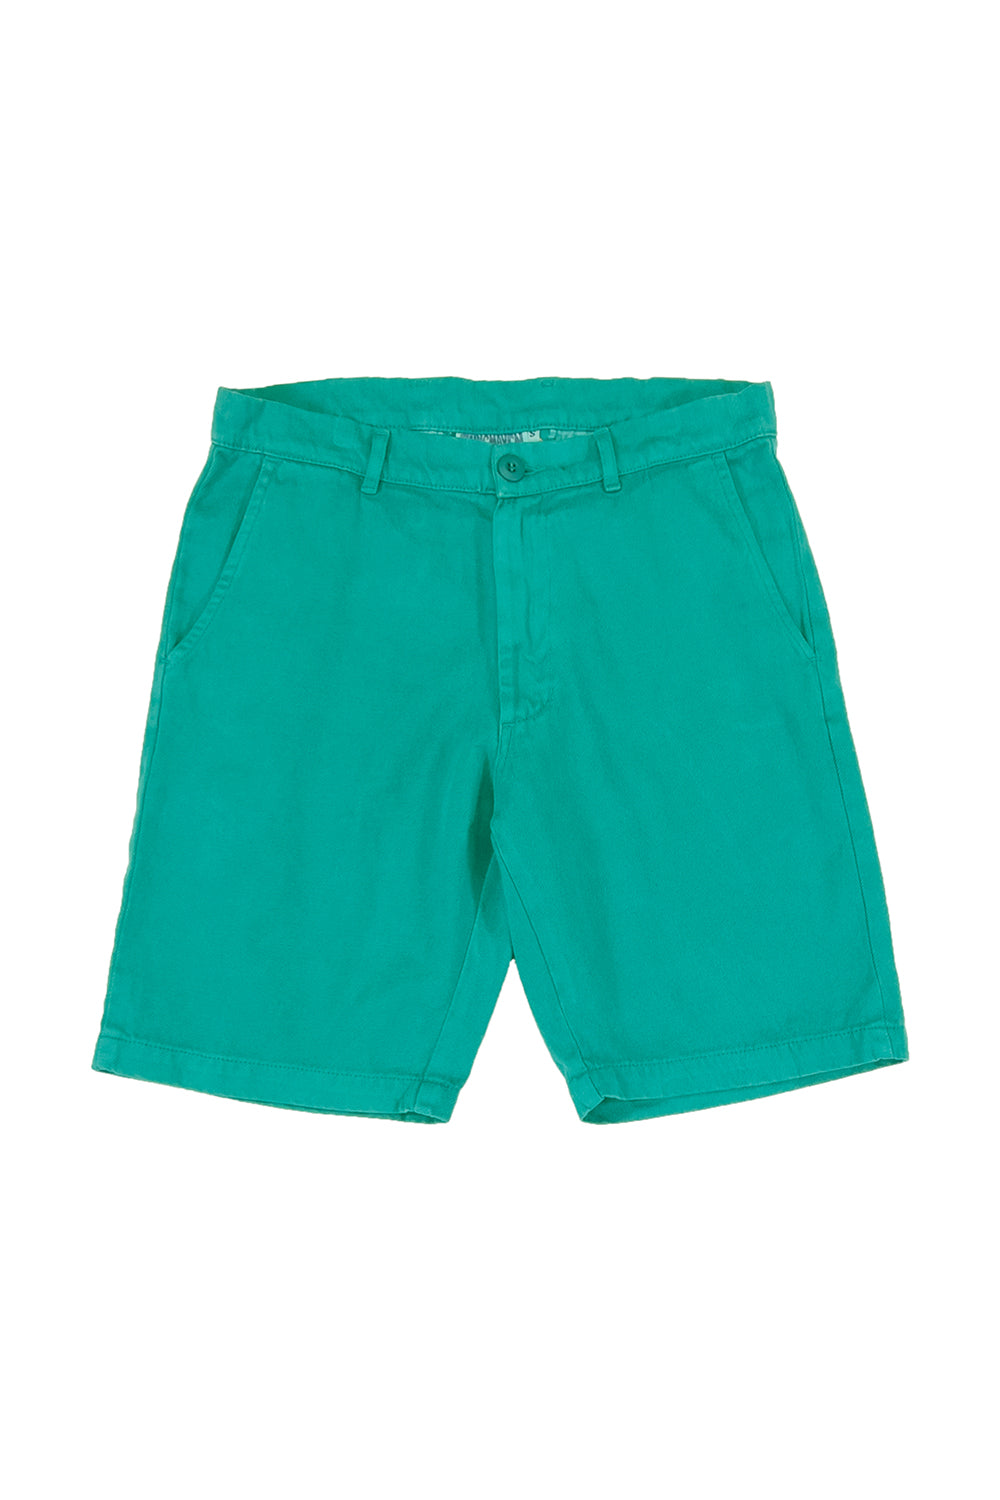 Gaviota Short | Jungmaven Hemp Clothing & Accessories / Color: Ivy Green